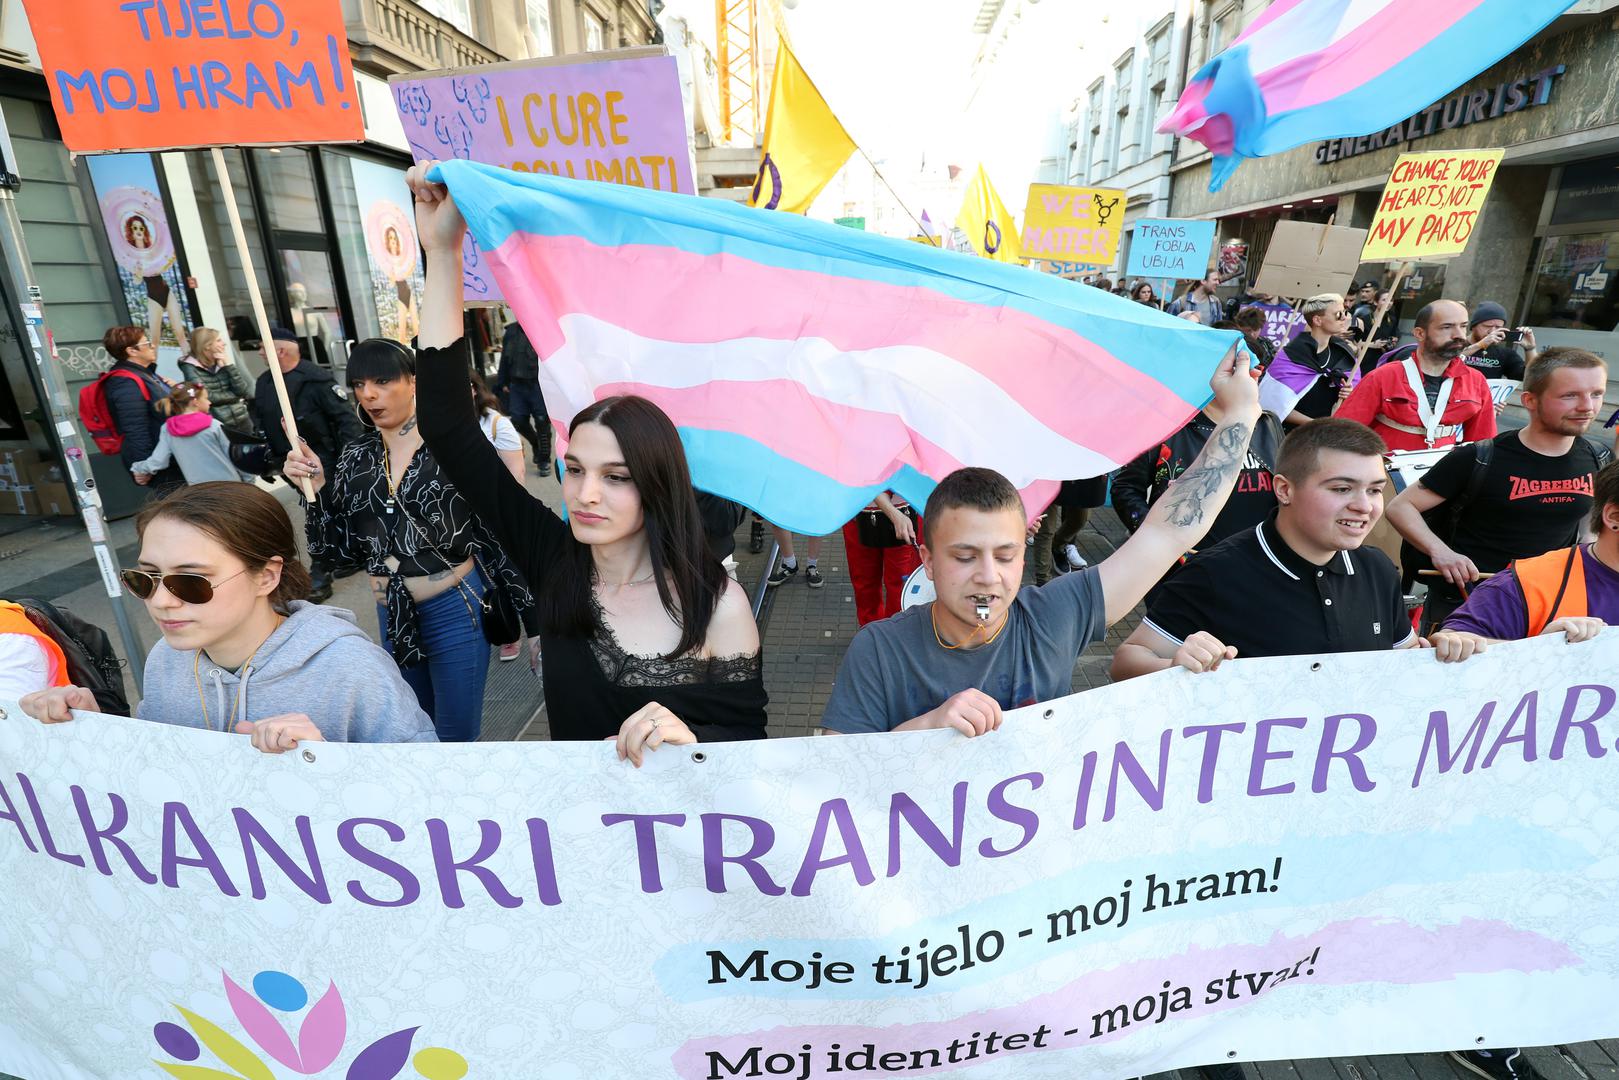 Udruge Trans Mreža Balkan, Trans Aid i Spektra organizirali su danas u Zagrebu prvi Balkanski trans inter marš pod sloganom "Moje tijelo - moj hram! Moj identitet - moja stvar".